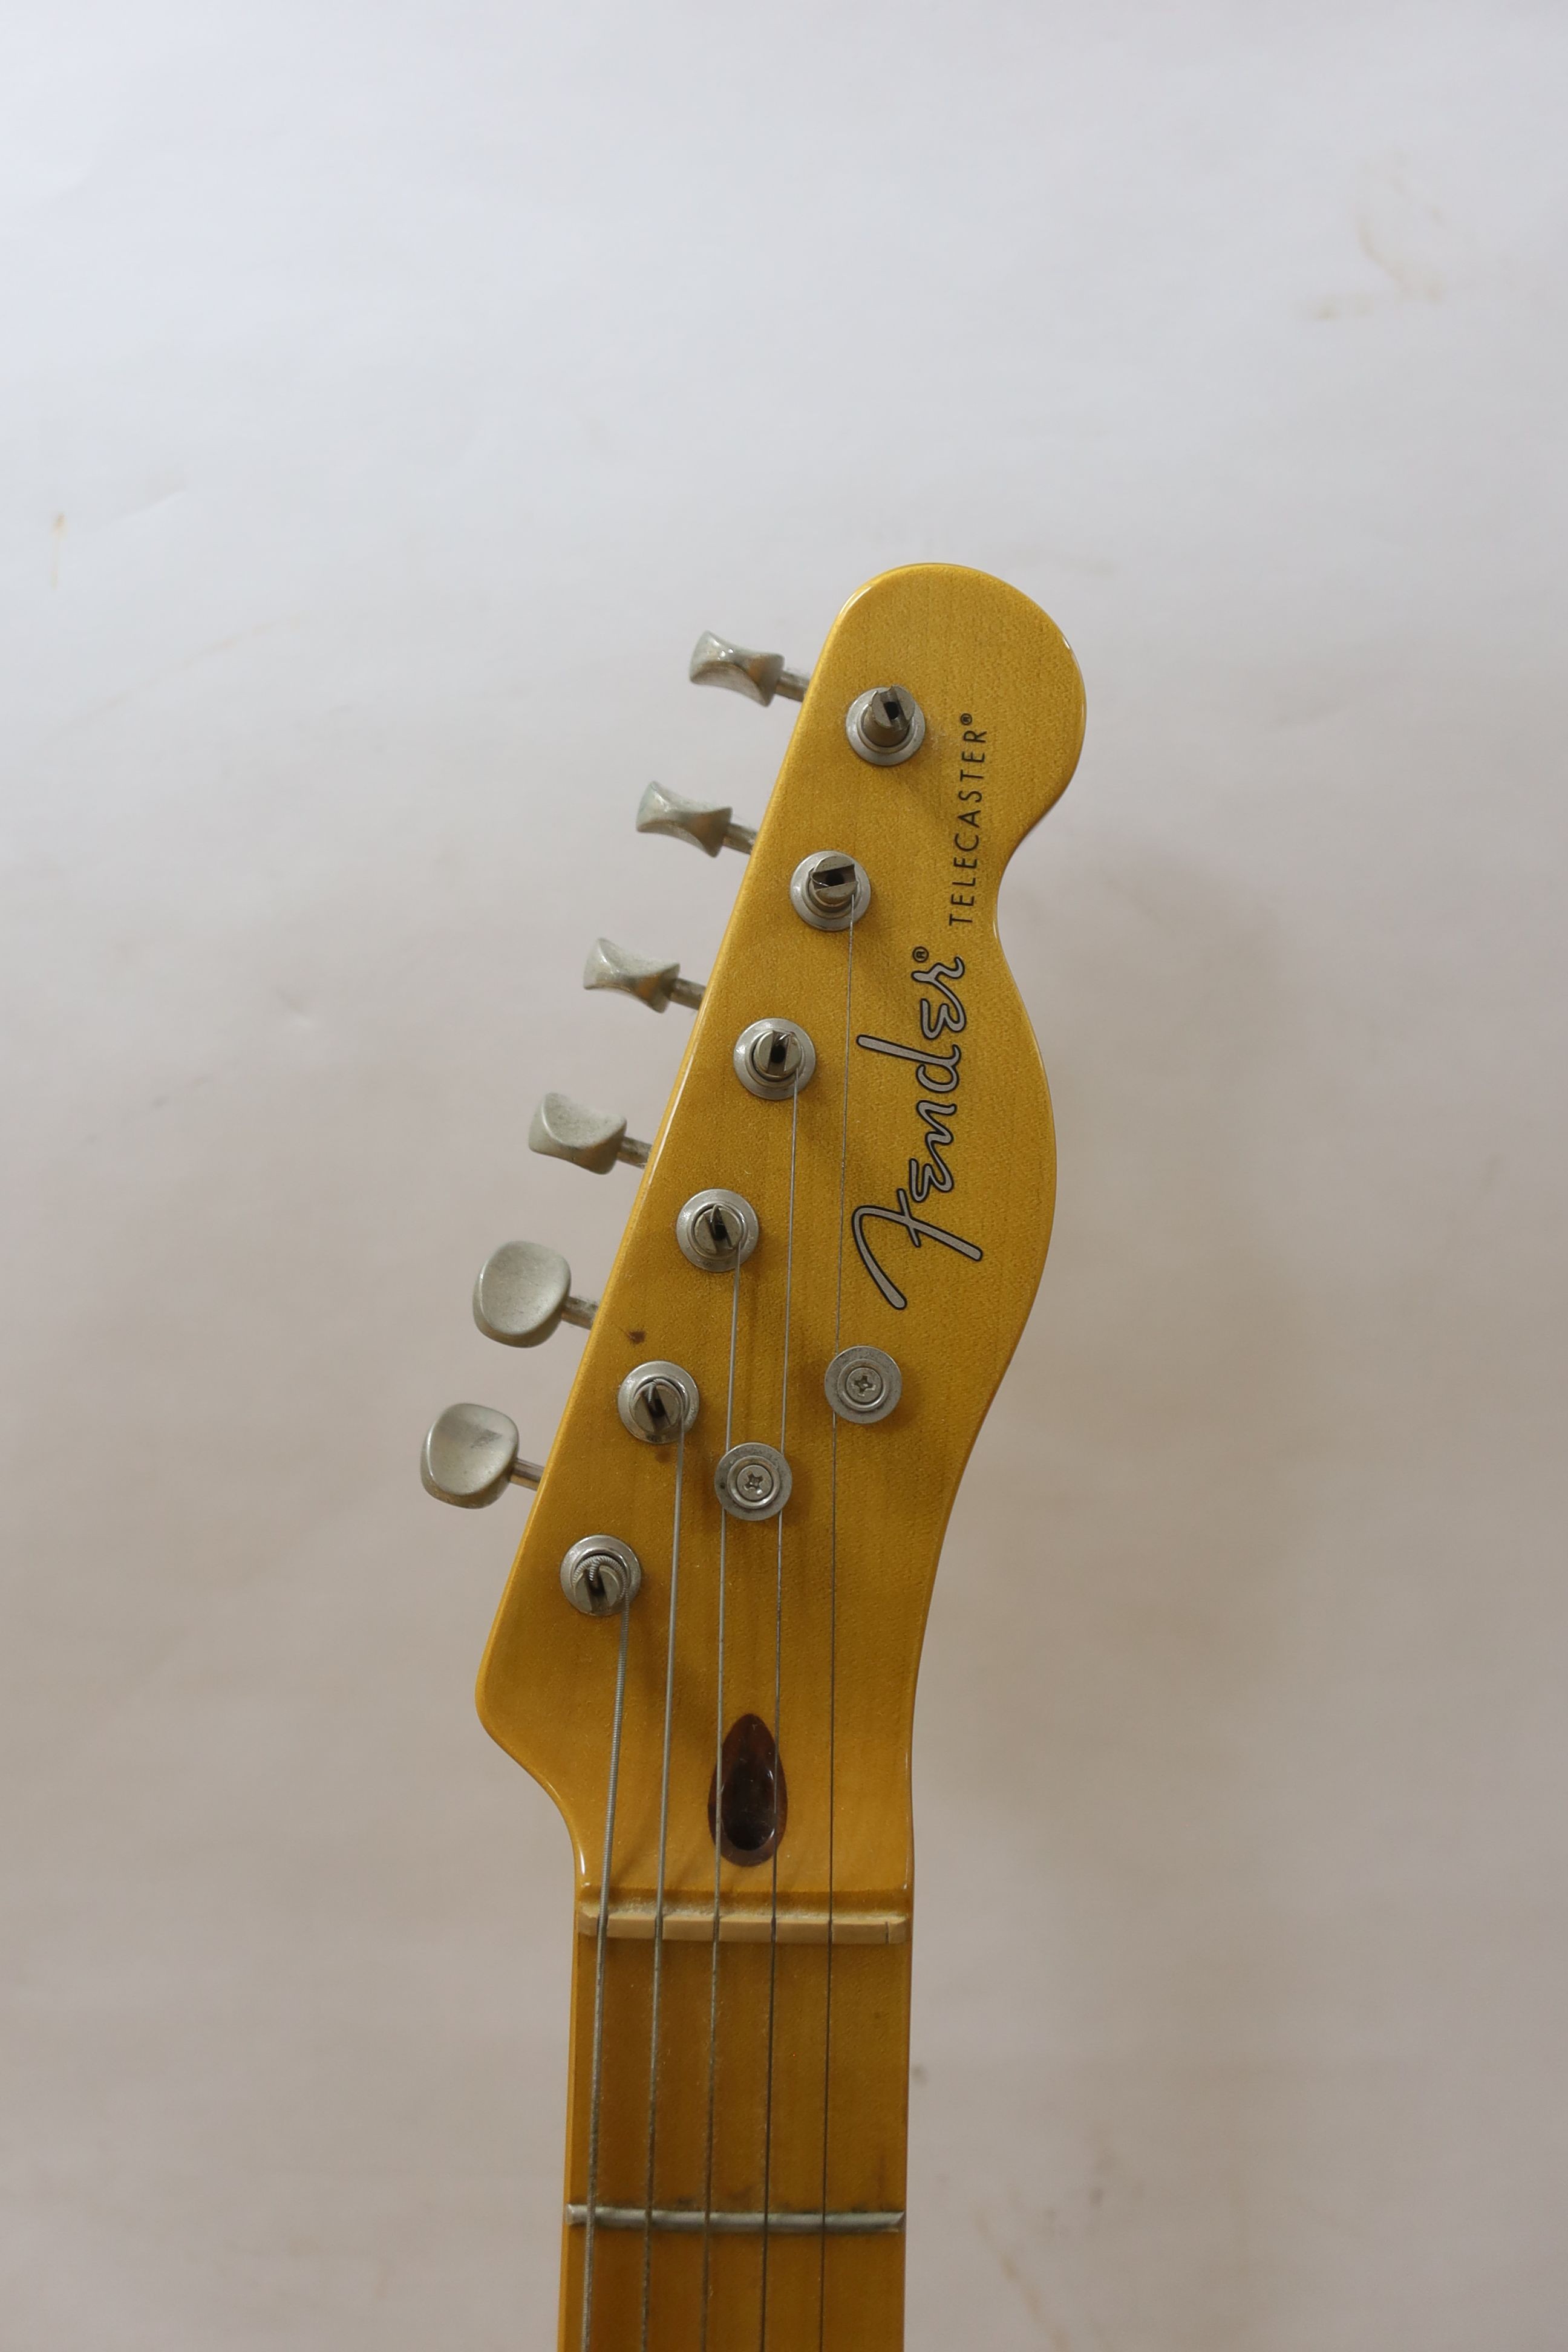 A Fender Telecaster guitar. Serial number CGF1314464 - Image 2 of 8